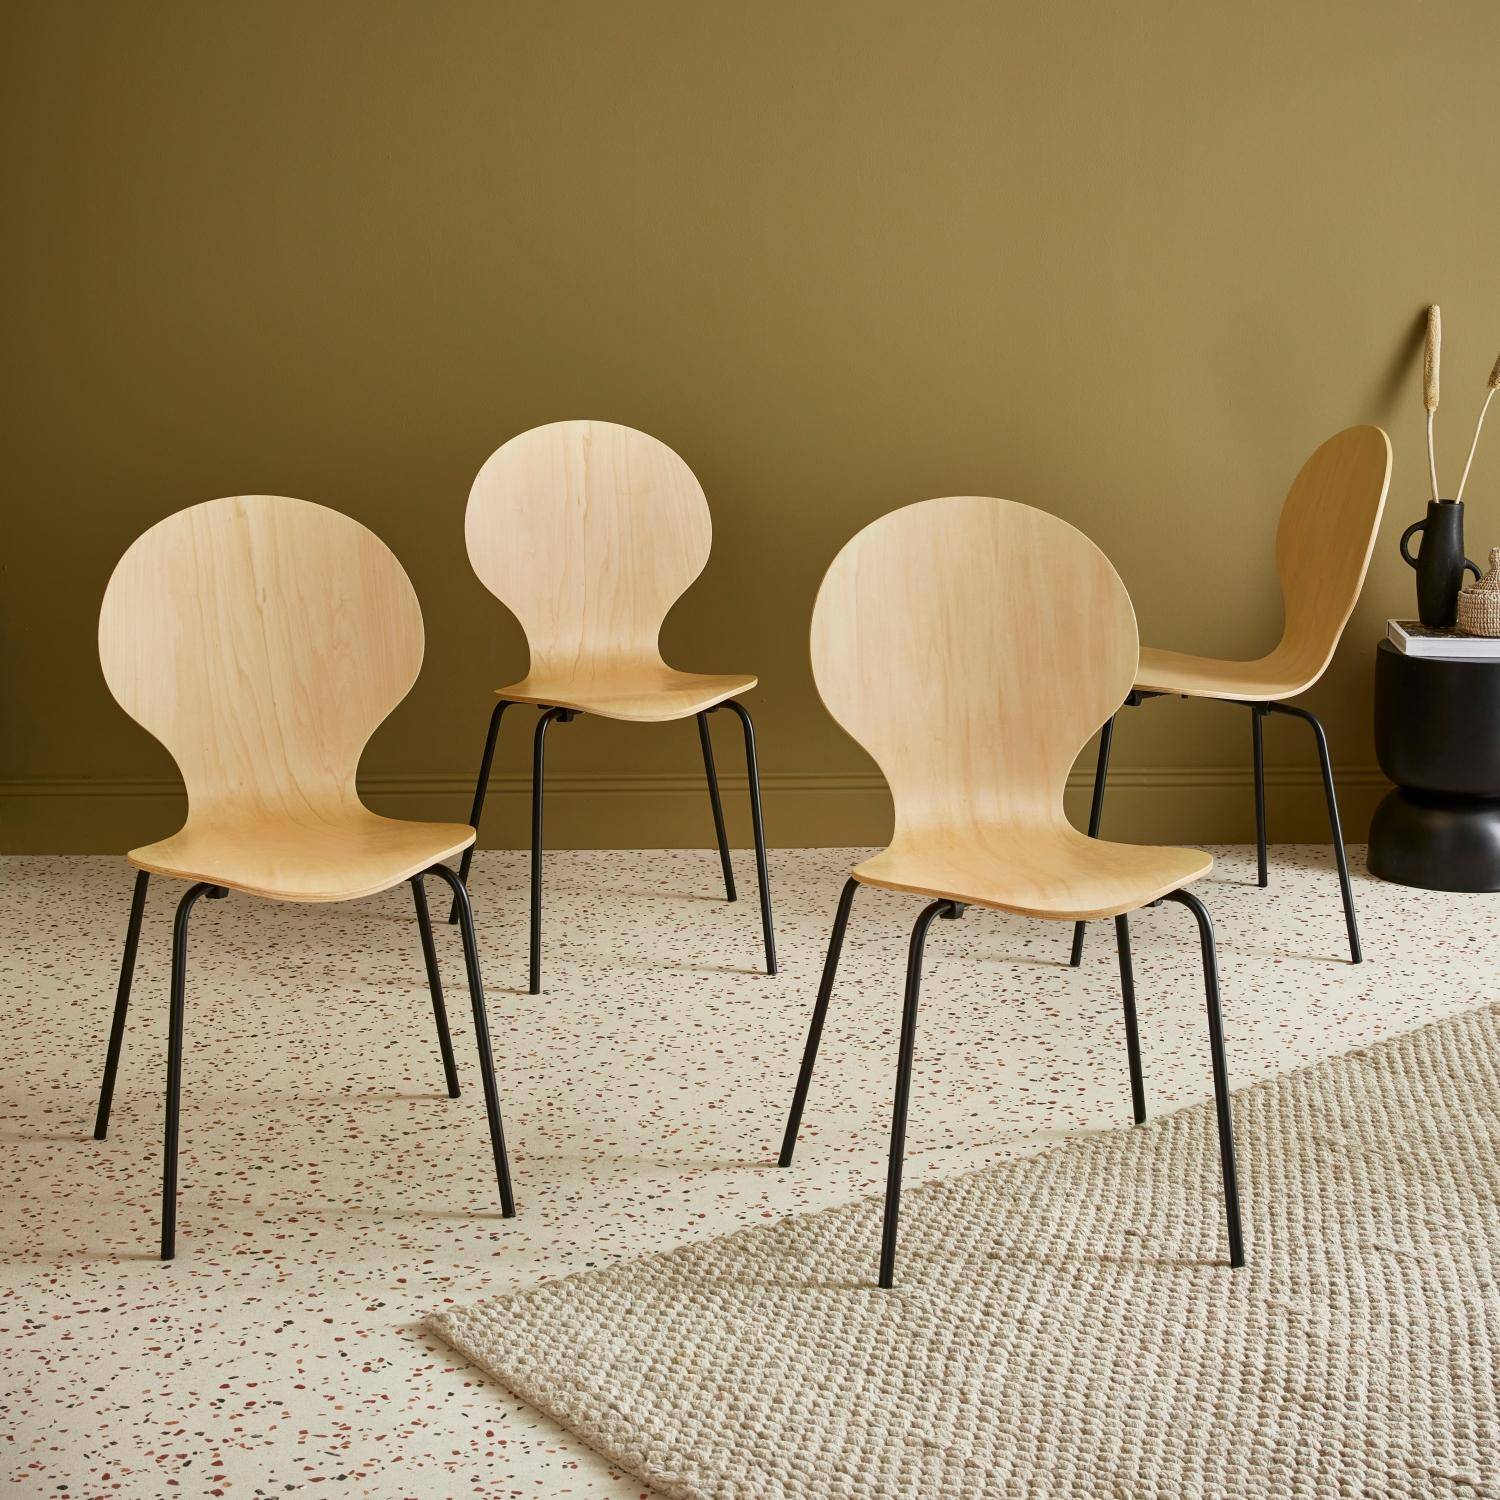 4er Set naturfarbene stapelbare Retro-Stühle, Hevea-Holz und Sperrholz, Stahlbeine, Naomi, B 43 x T 48 x H 87cm,sweeek,Photo1